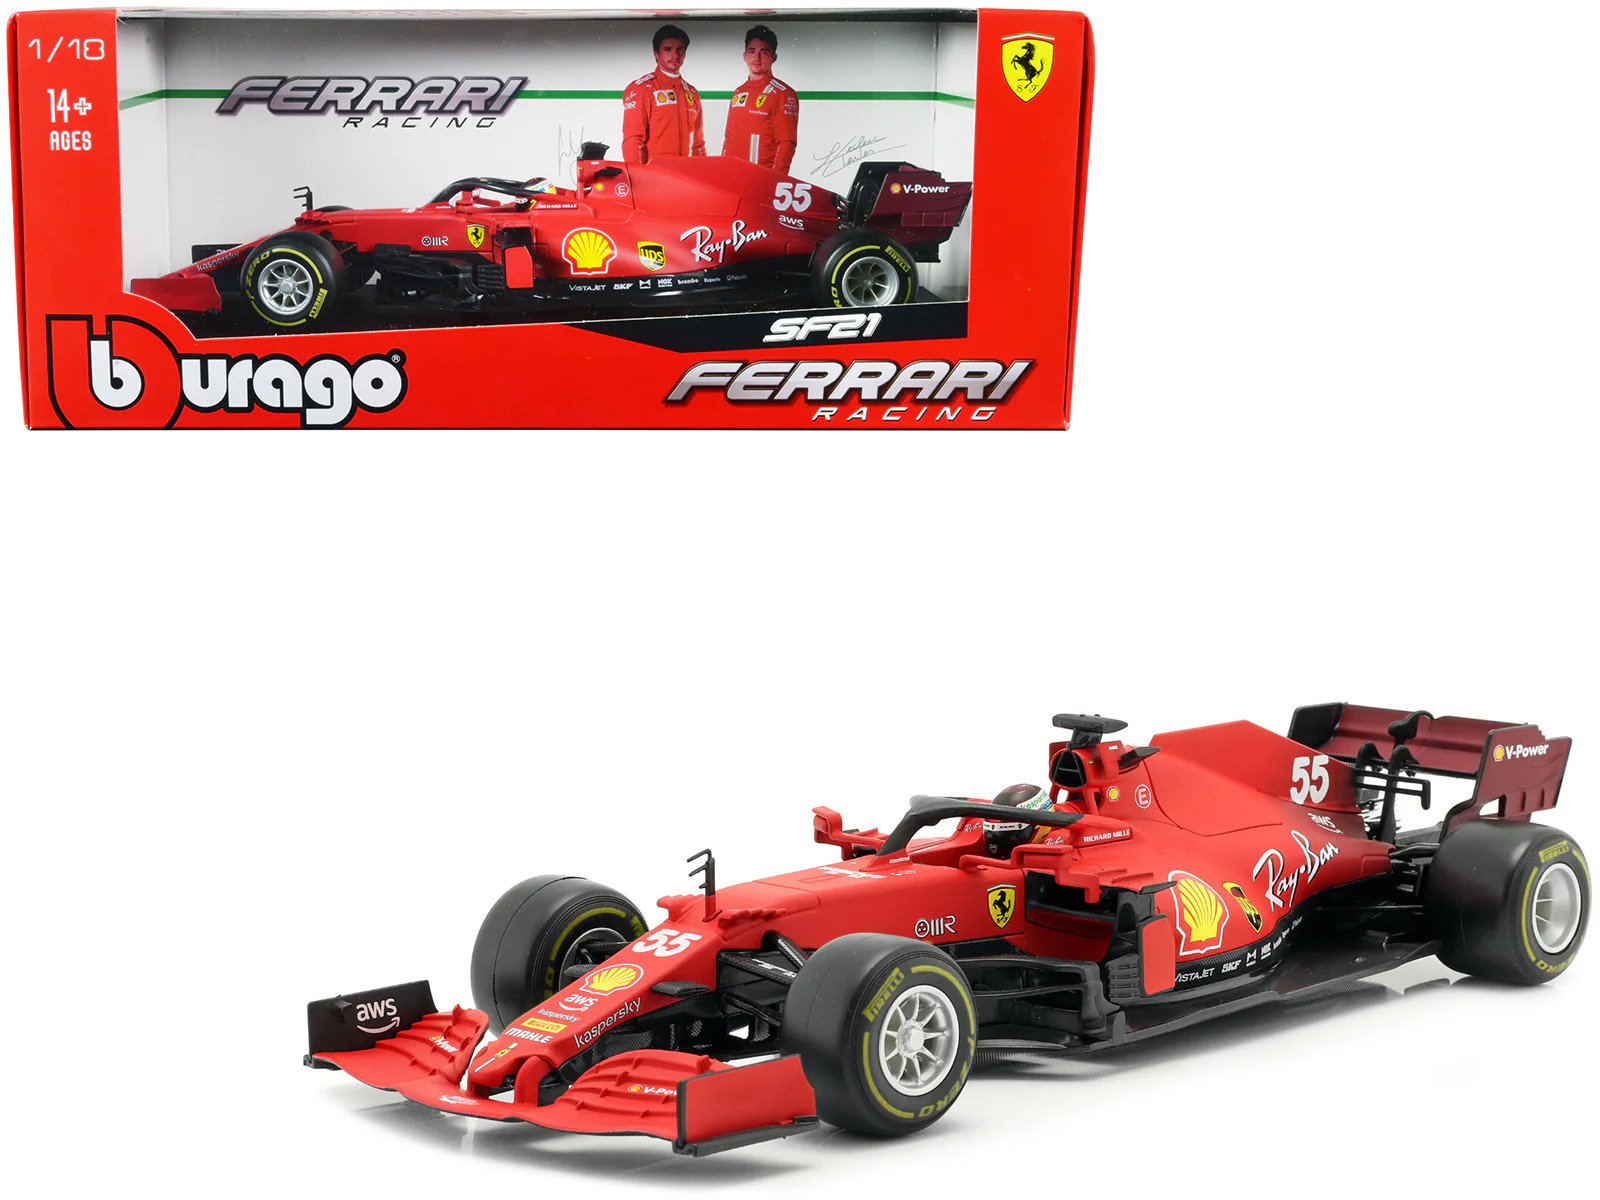 Ferrari SF21 55 Carlos Sainz Formula One F1 Car Racing Series 1/18 Diecast Model